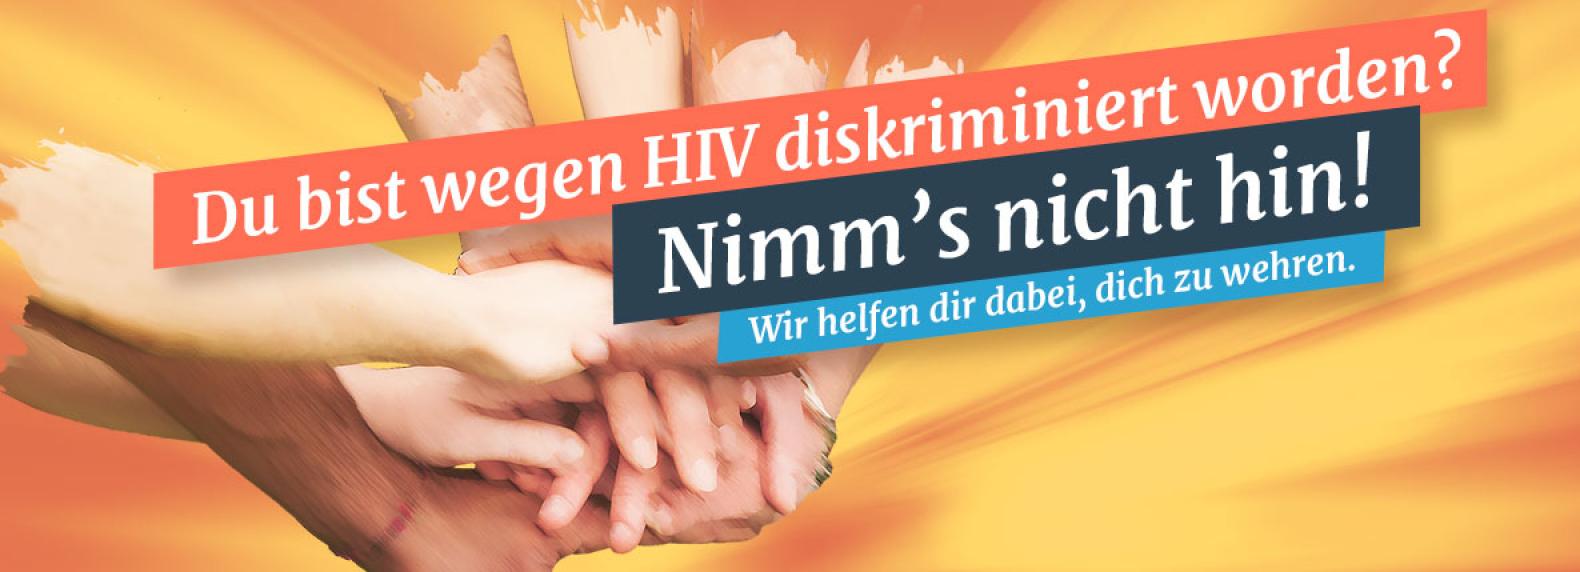 Portal hiv-diskriminierung